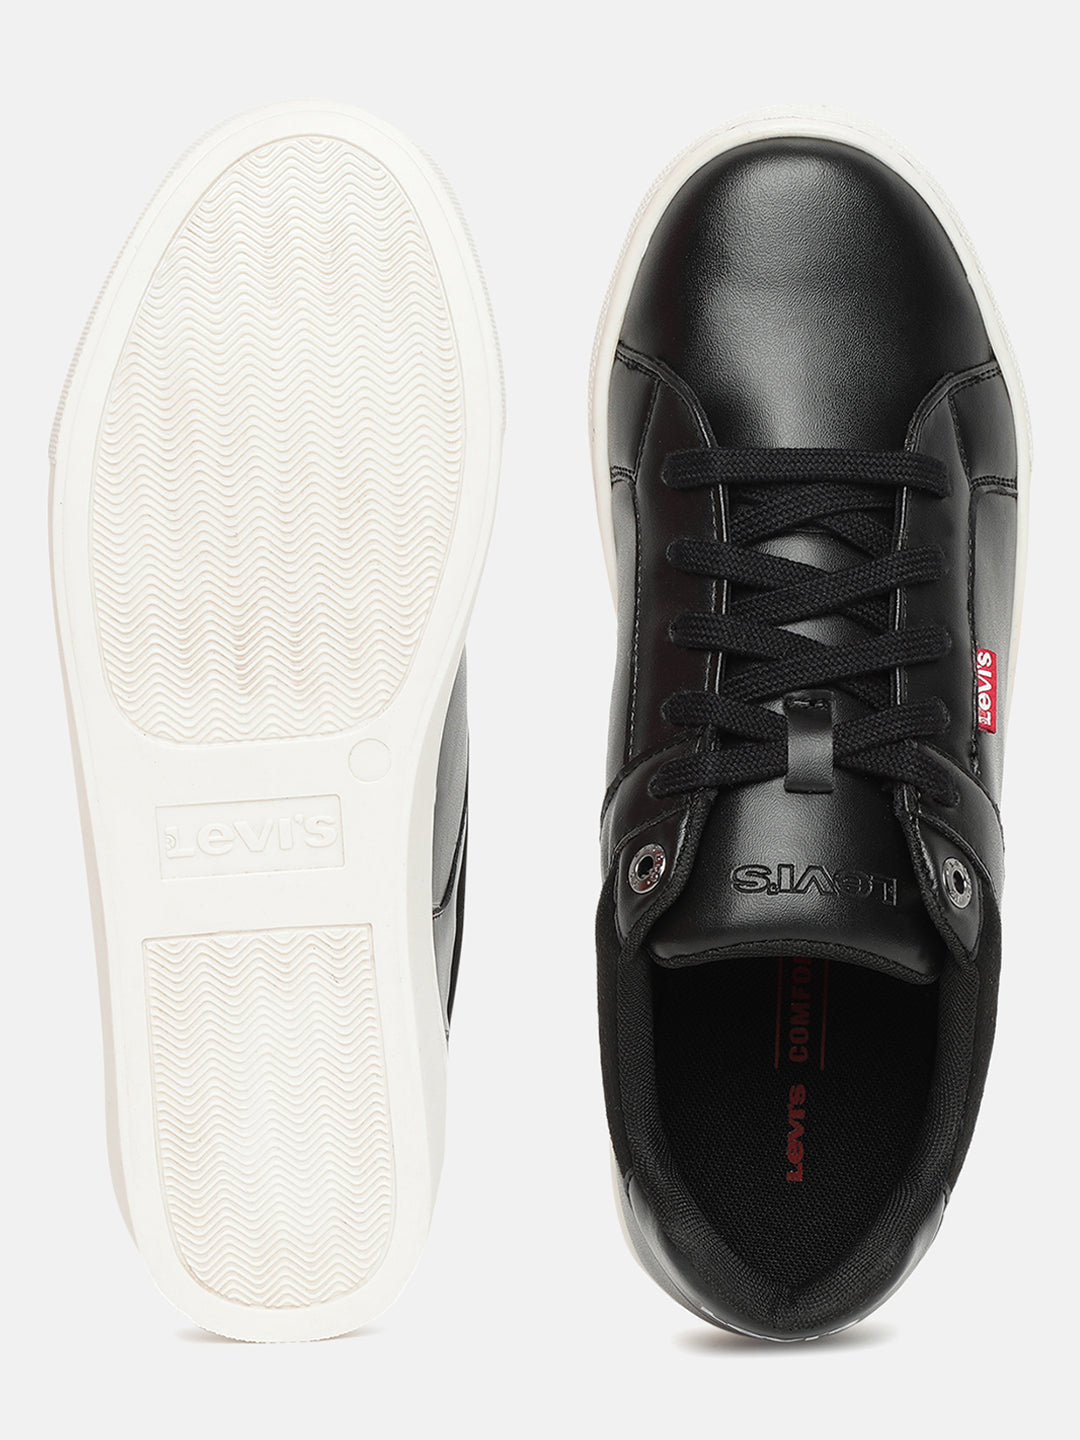 Men's Black Sneakers